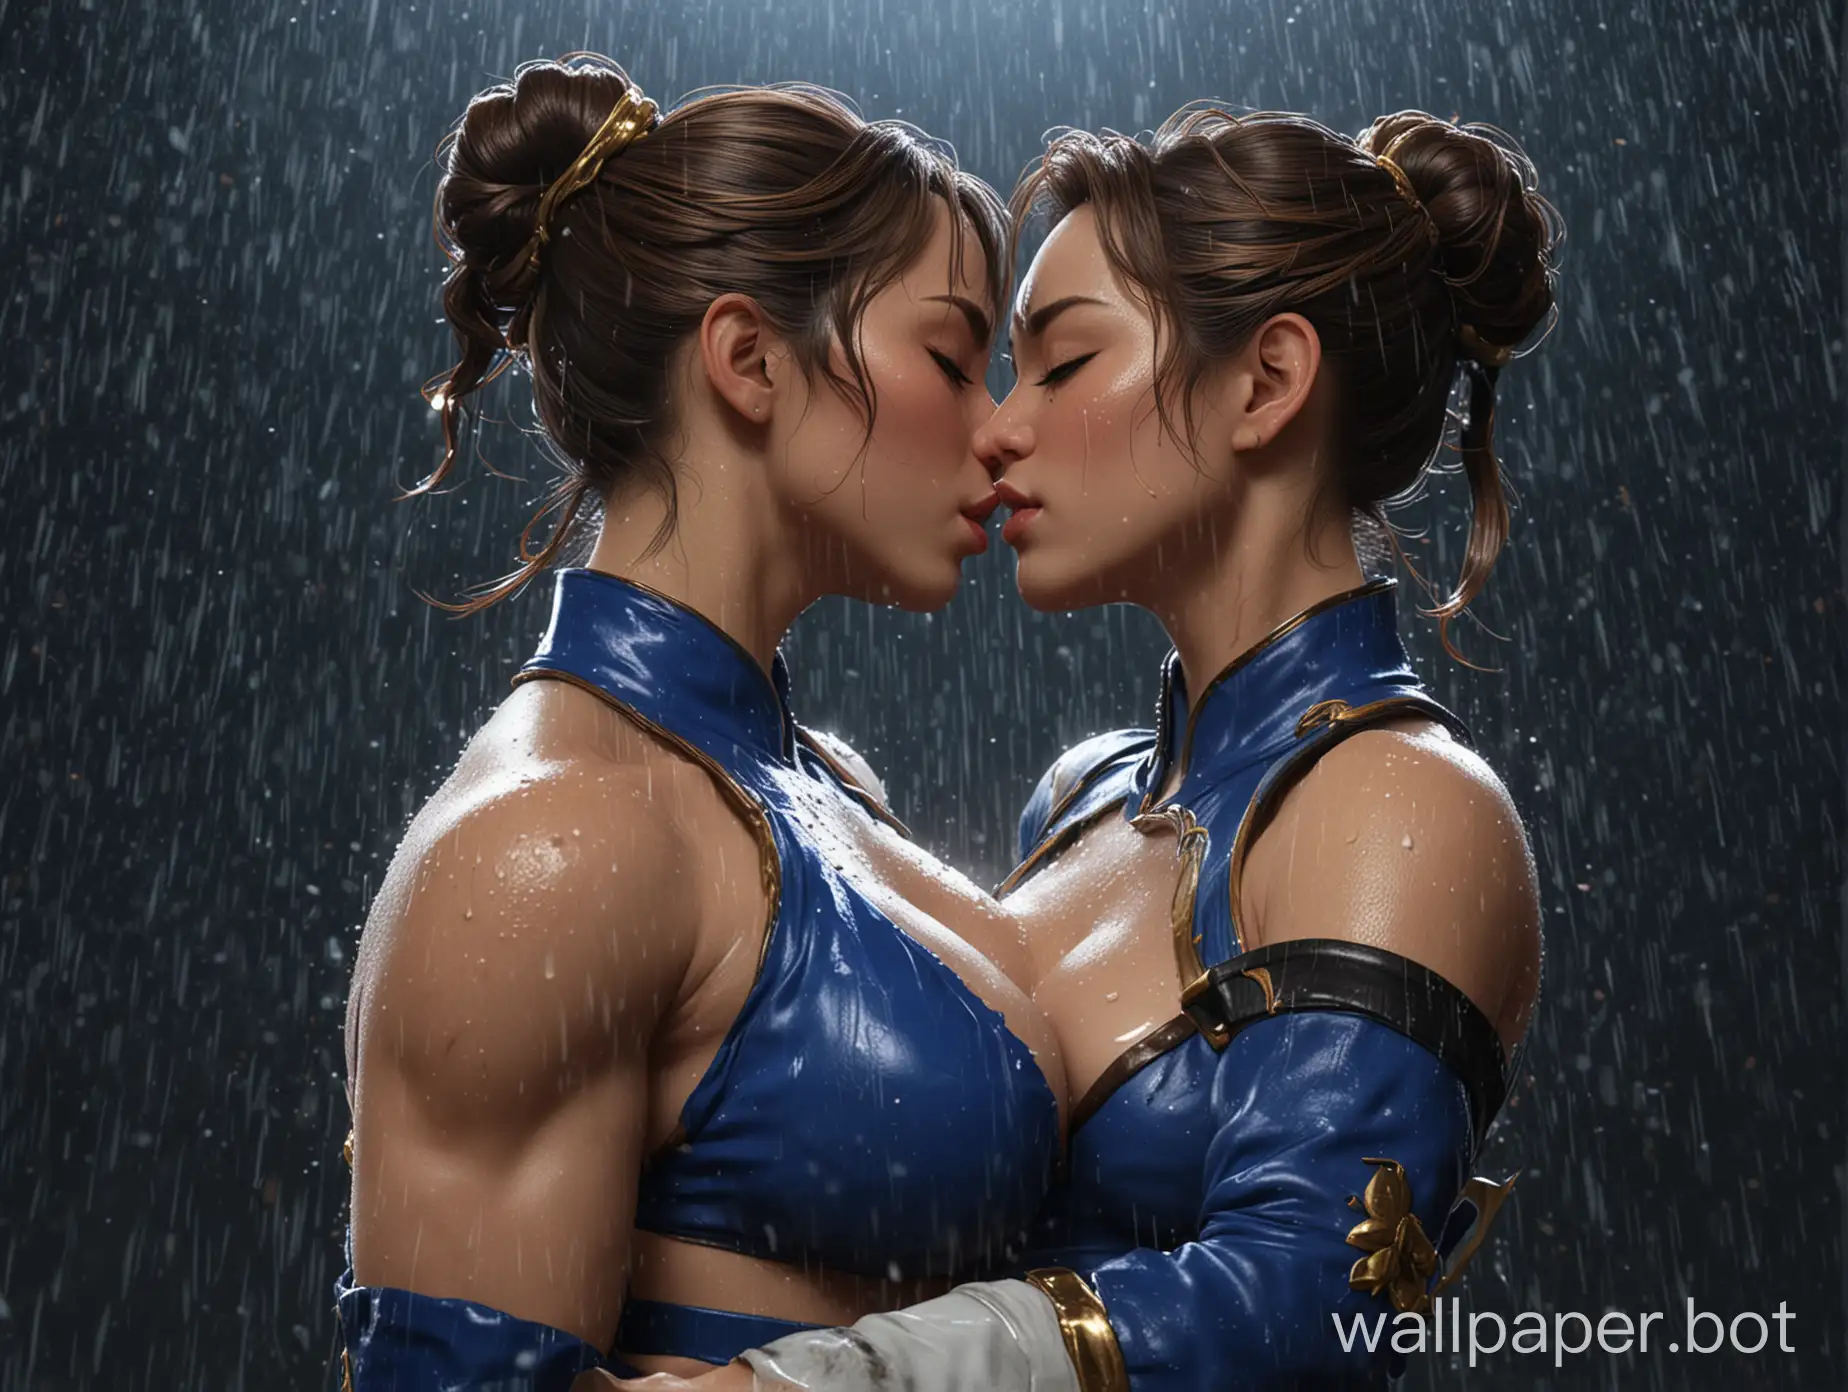 chun li kissing kasumi, large breasts, rain, dark background